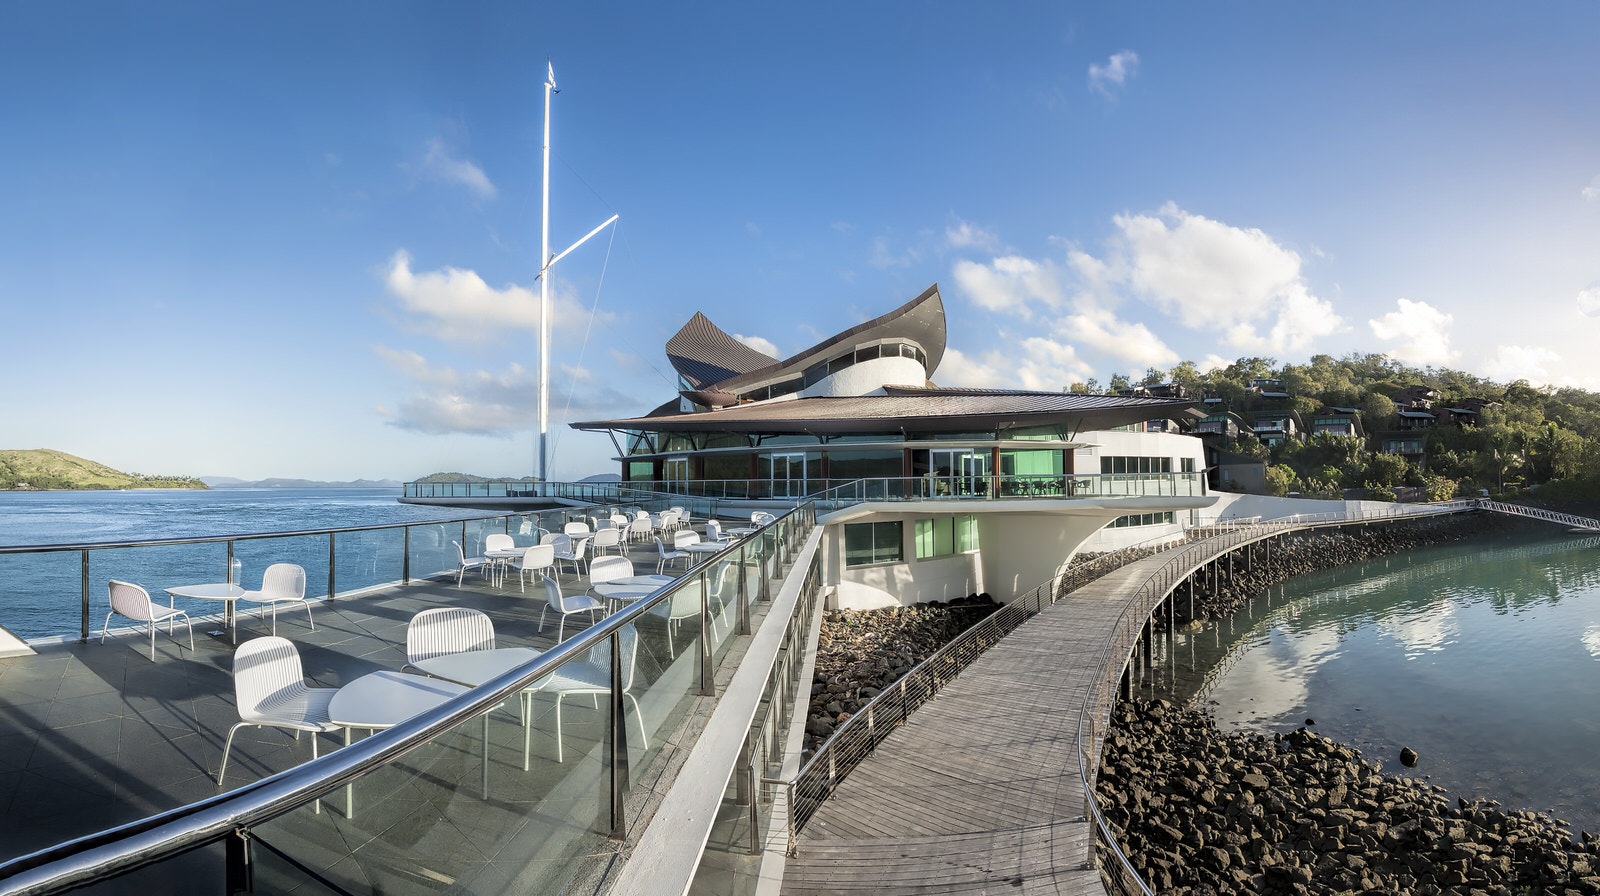 The Hamilton Island Yacht Club designed by Walter Barda is often likened to the Sydney Opera House.